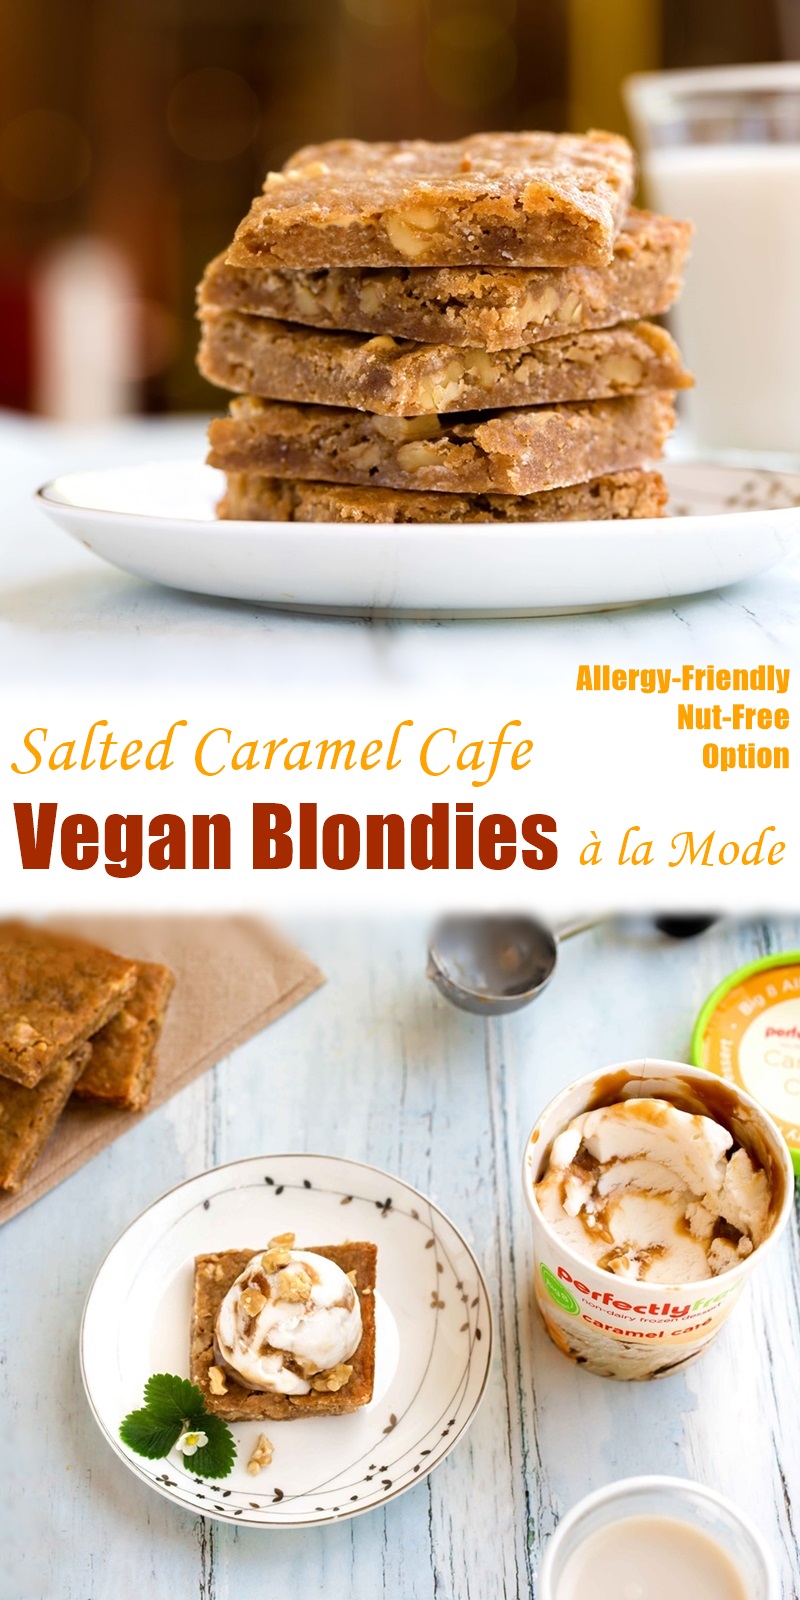 Salted Caramel Cafe Vegan Blondies Recipe served a la mode! Includes simple nut-free option!